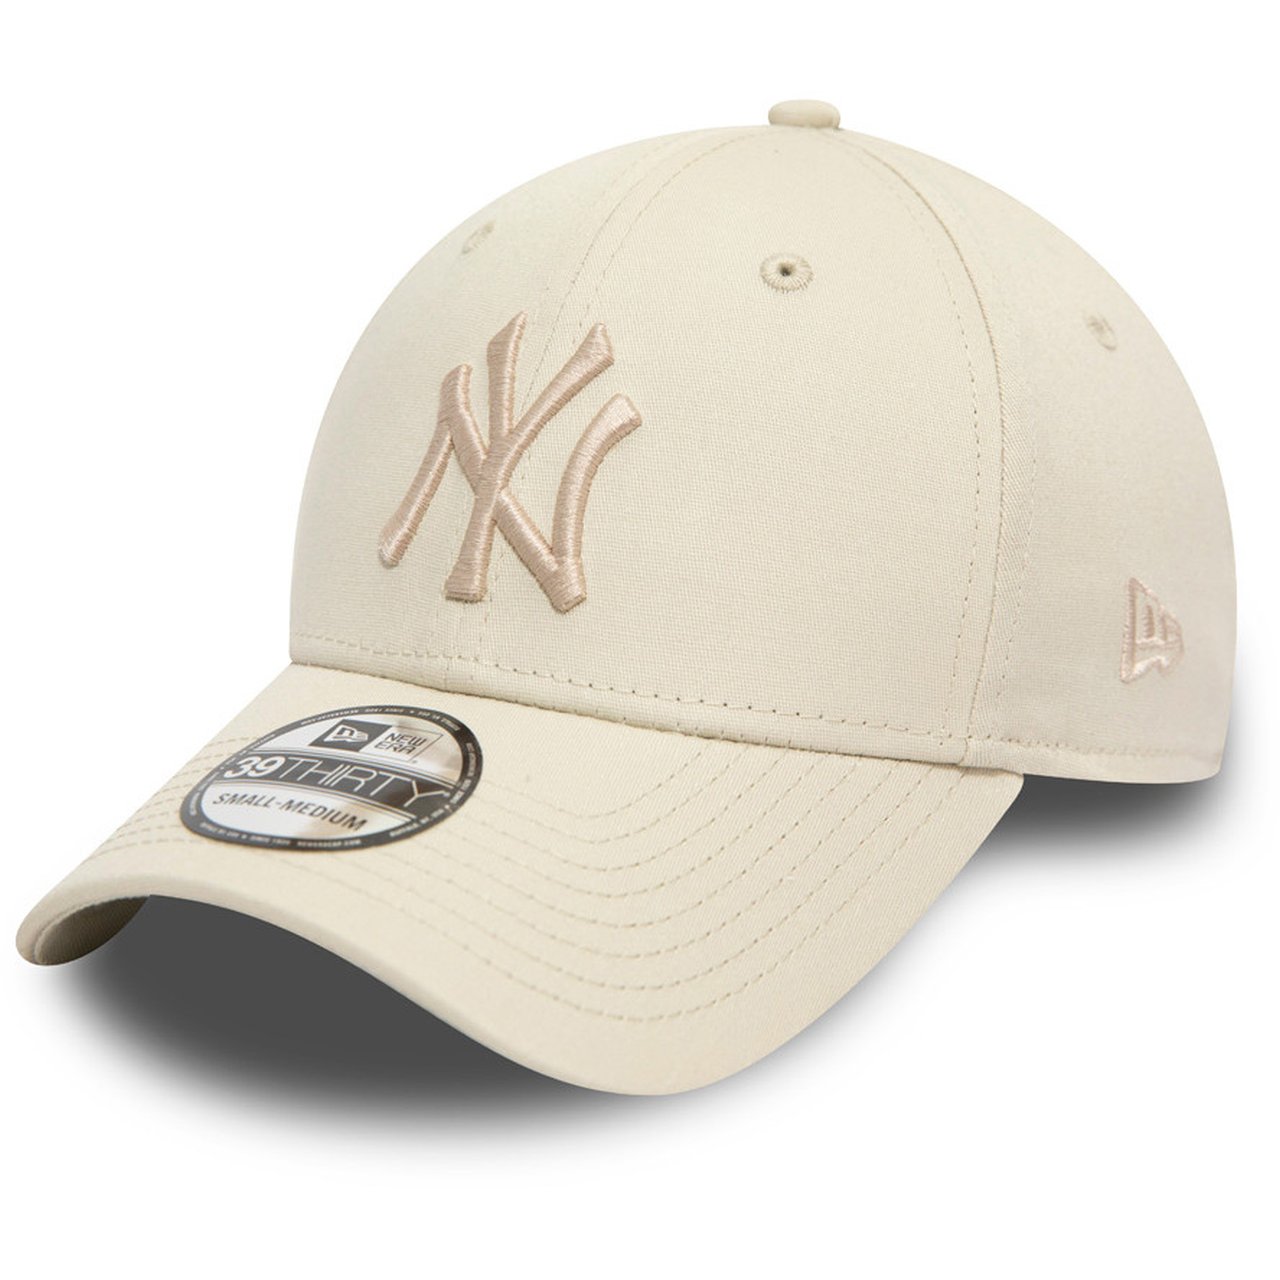 New Era 39Thirty Flexfit Cap New York Yankees stone beige Stretch